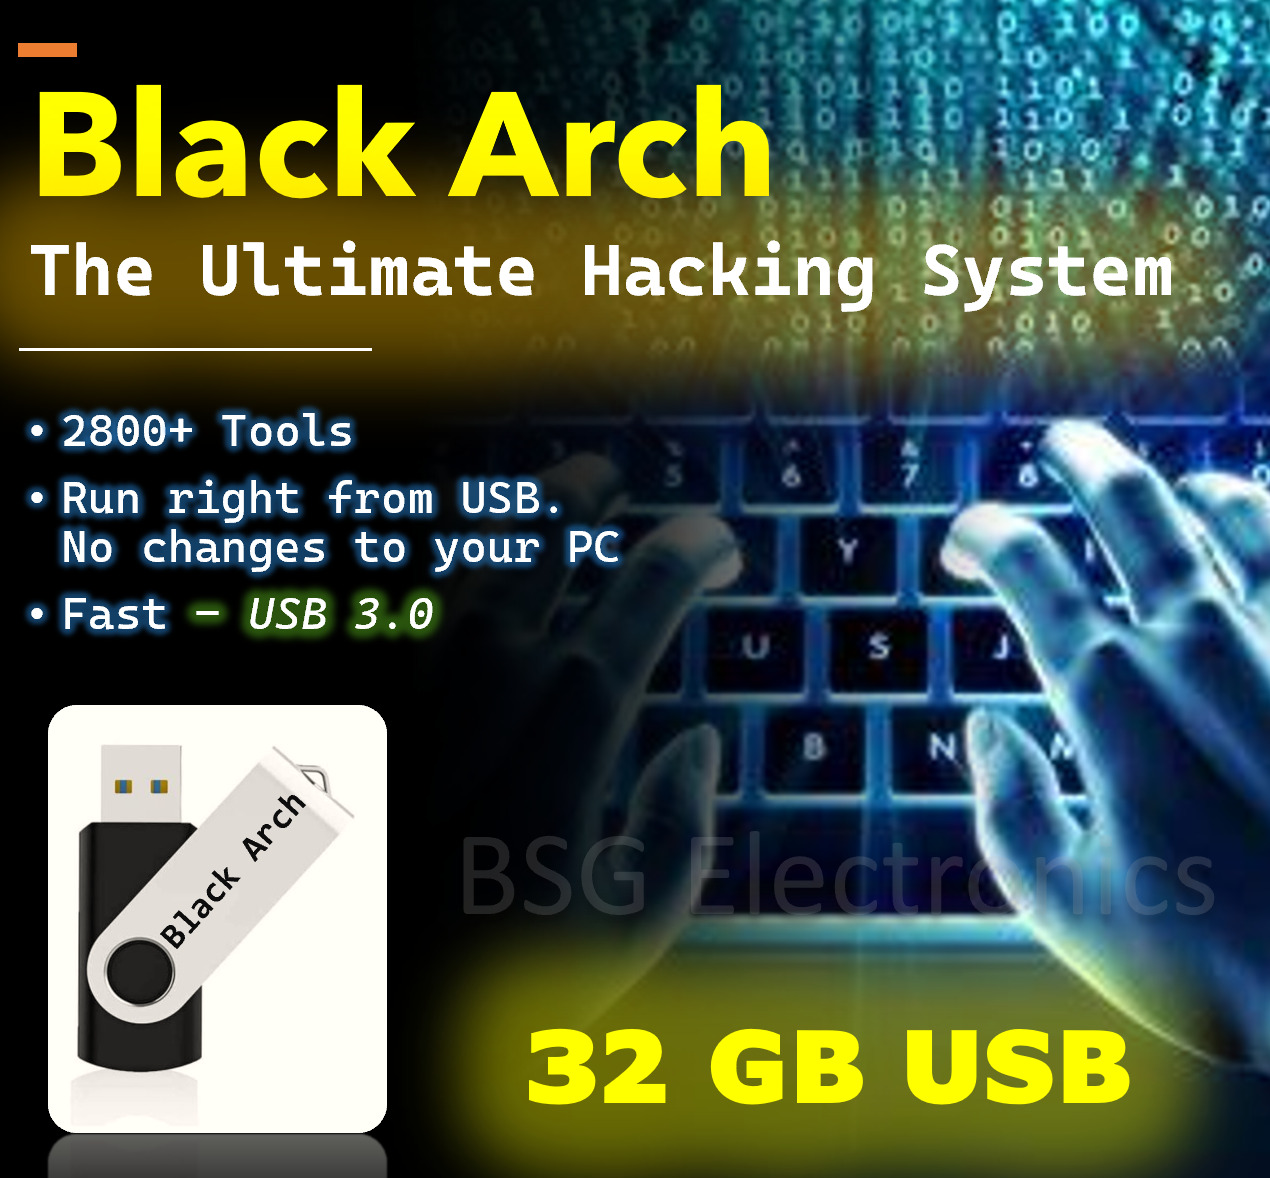 BlackArch Hacking Operating System - 32GB USB